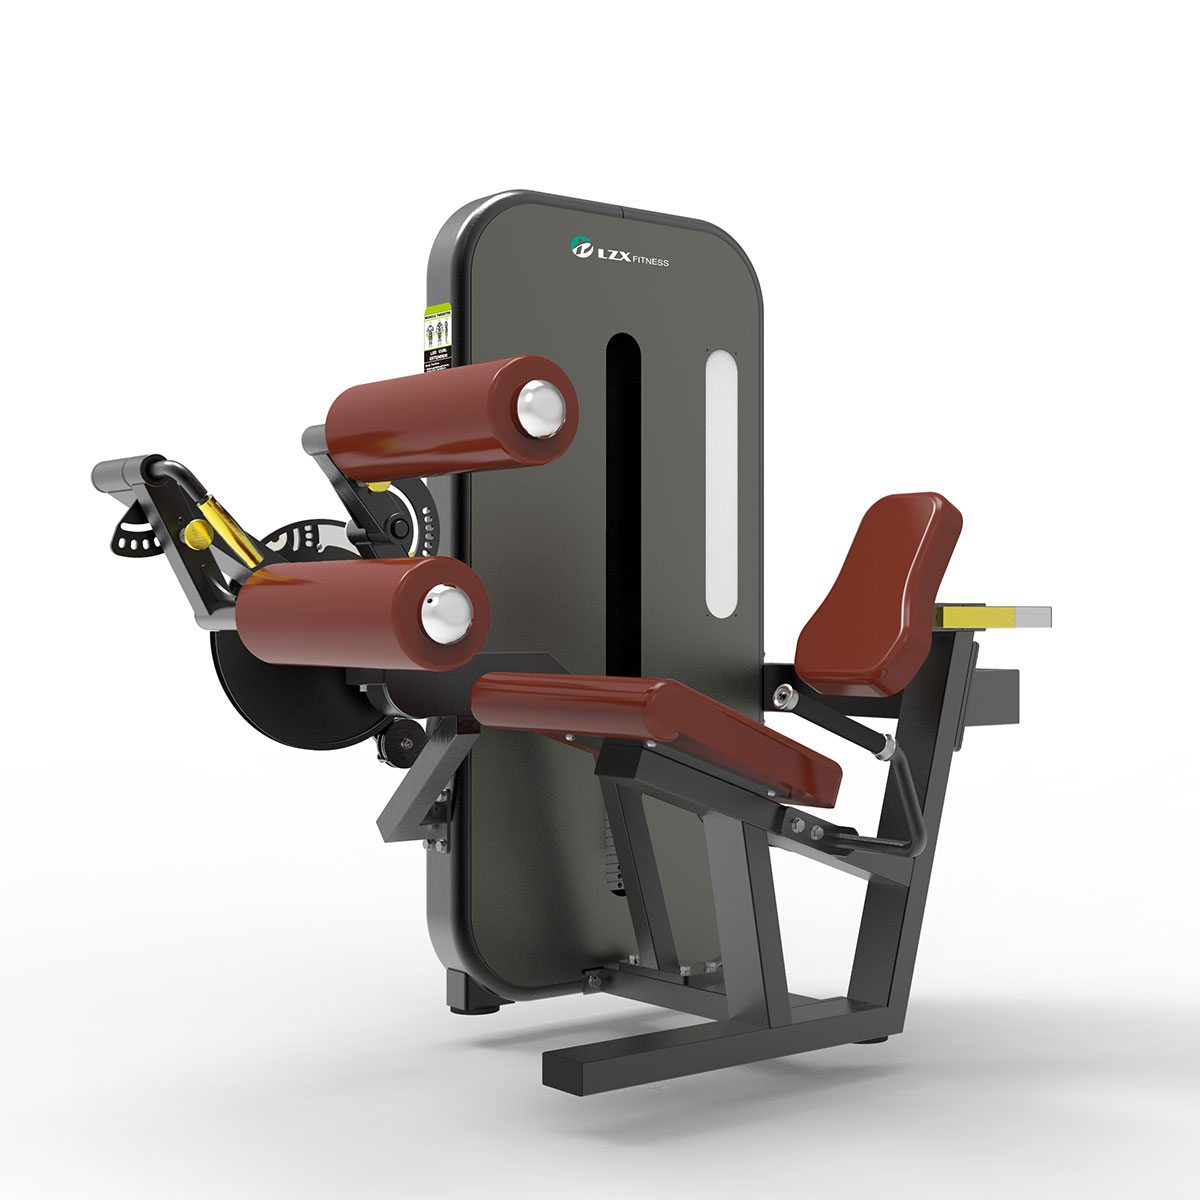 LZX-1054 fitness equipment